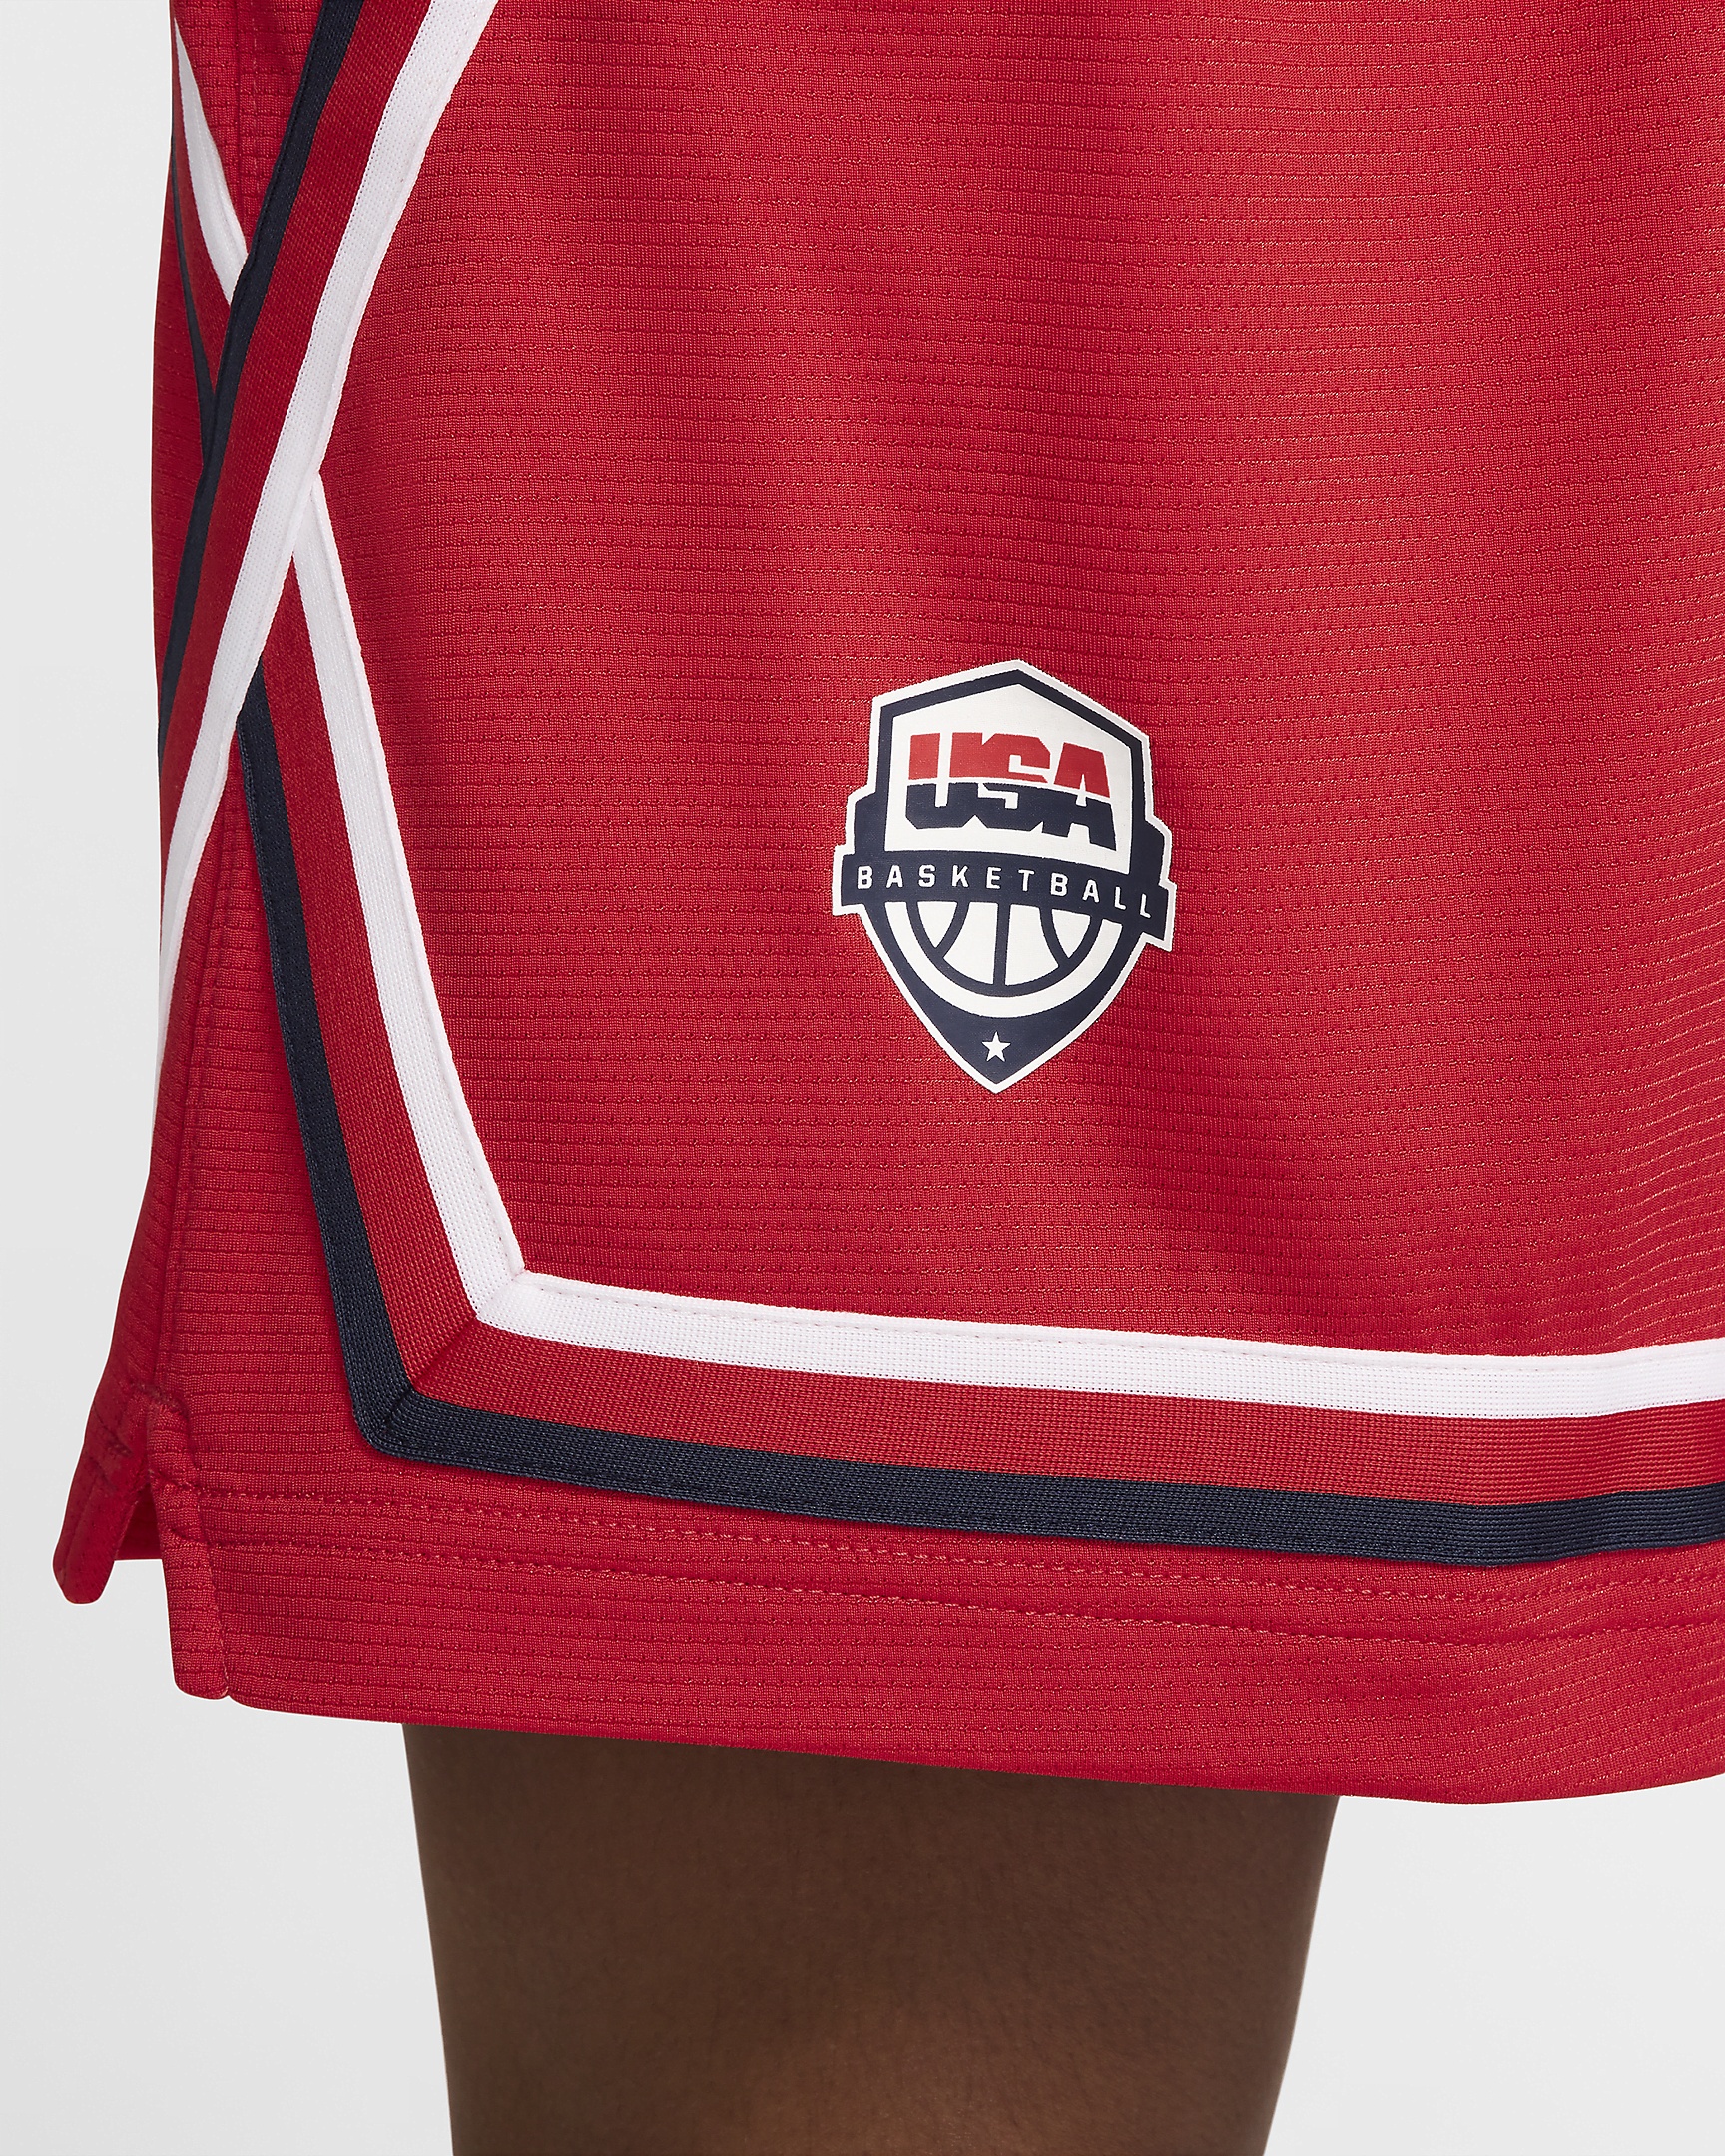 USAB Practice Women's Nike Basketball Shorts - 5